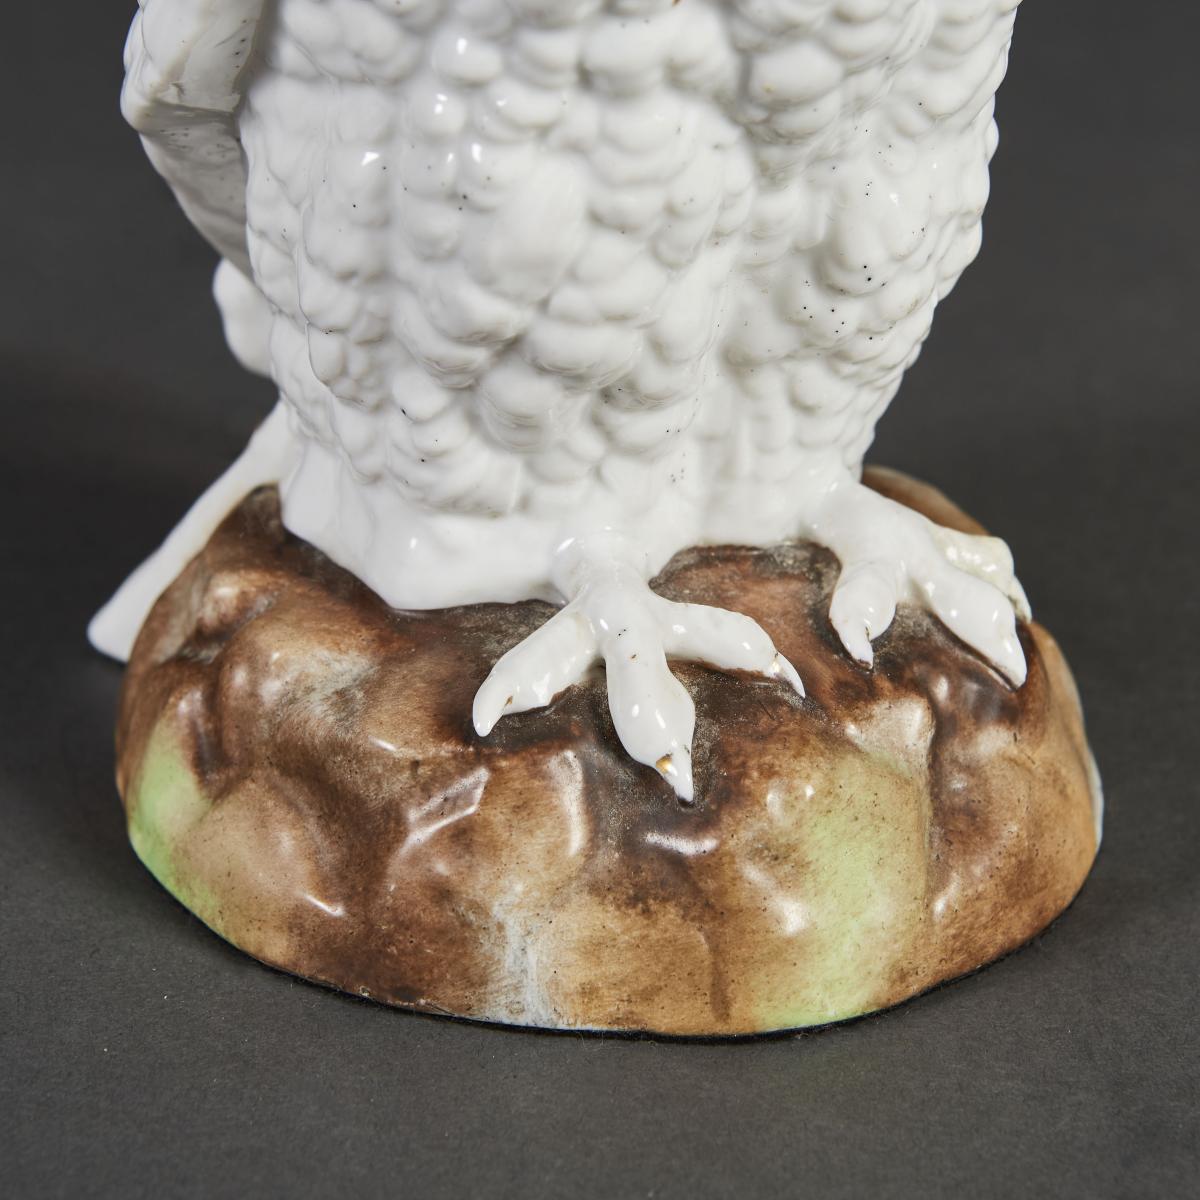 An Unusual Ceramic Owl Lamp